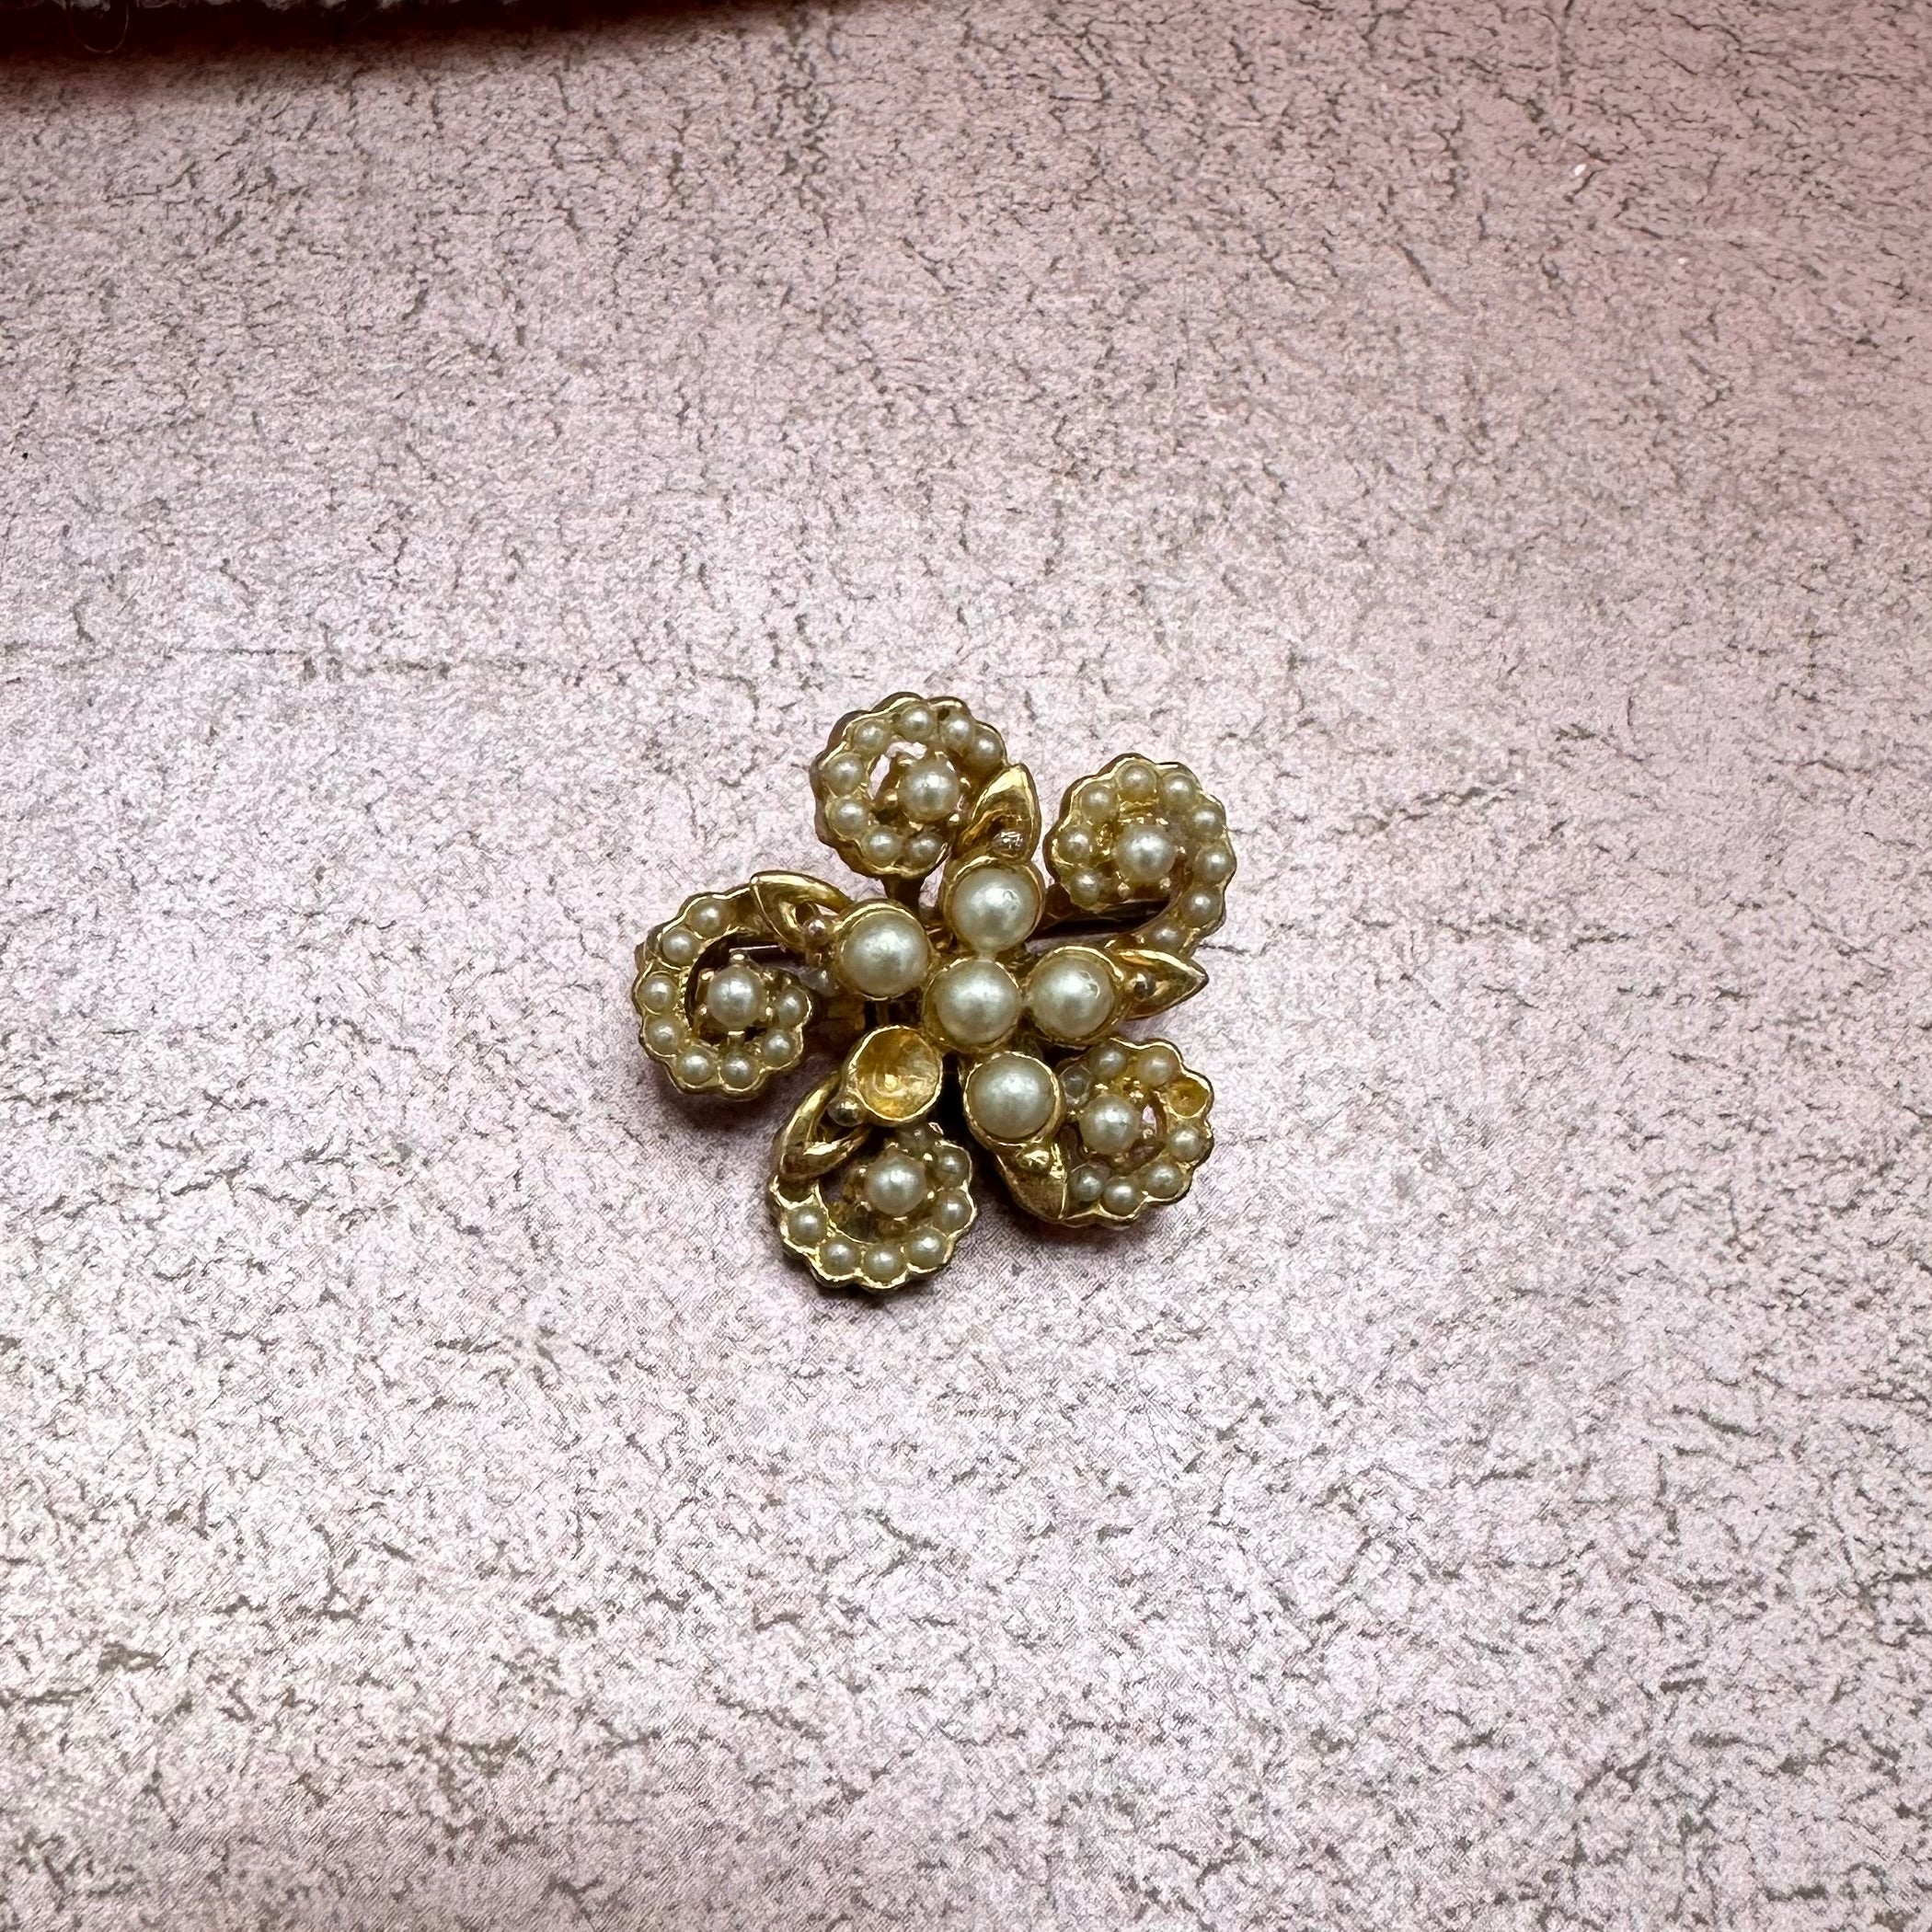 Vintage Gold Tone Faux Pearl Flower Brooch